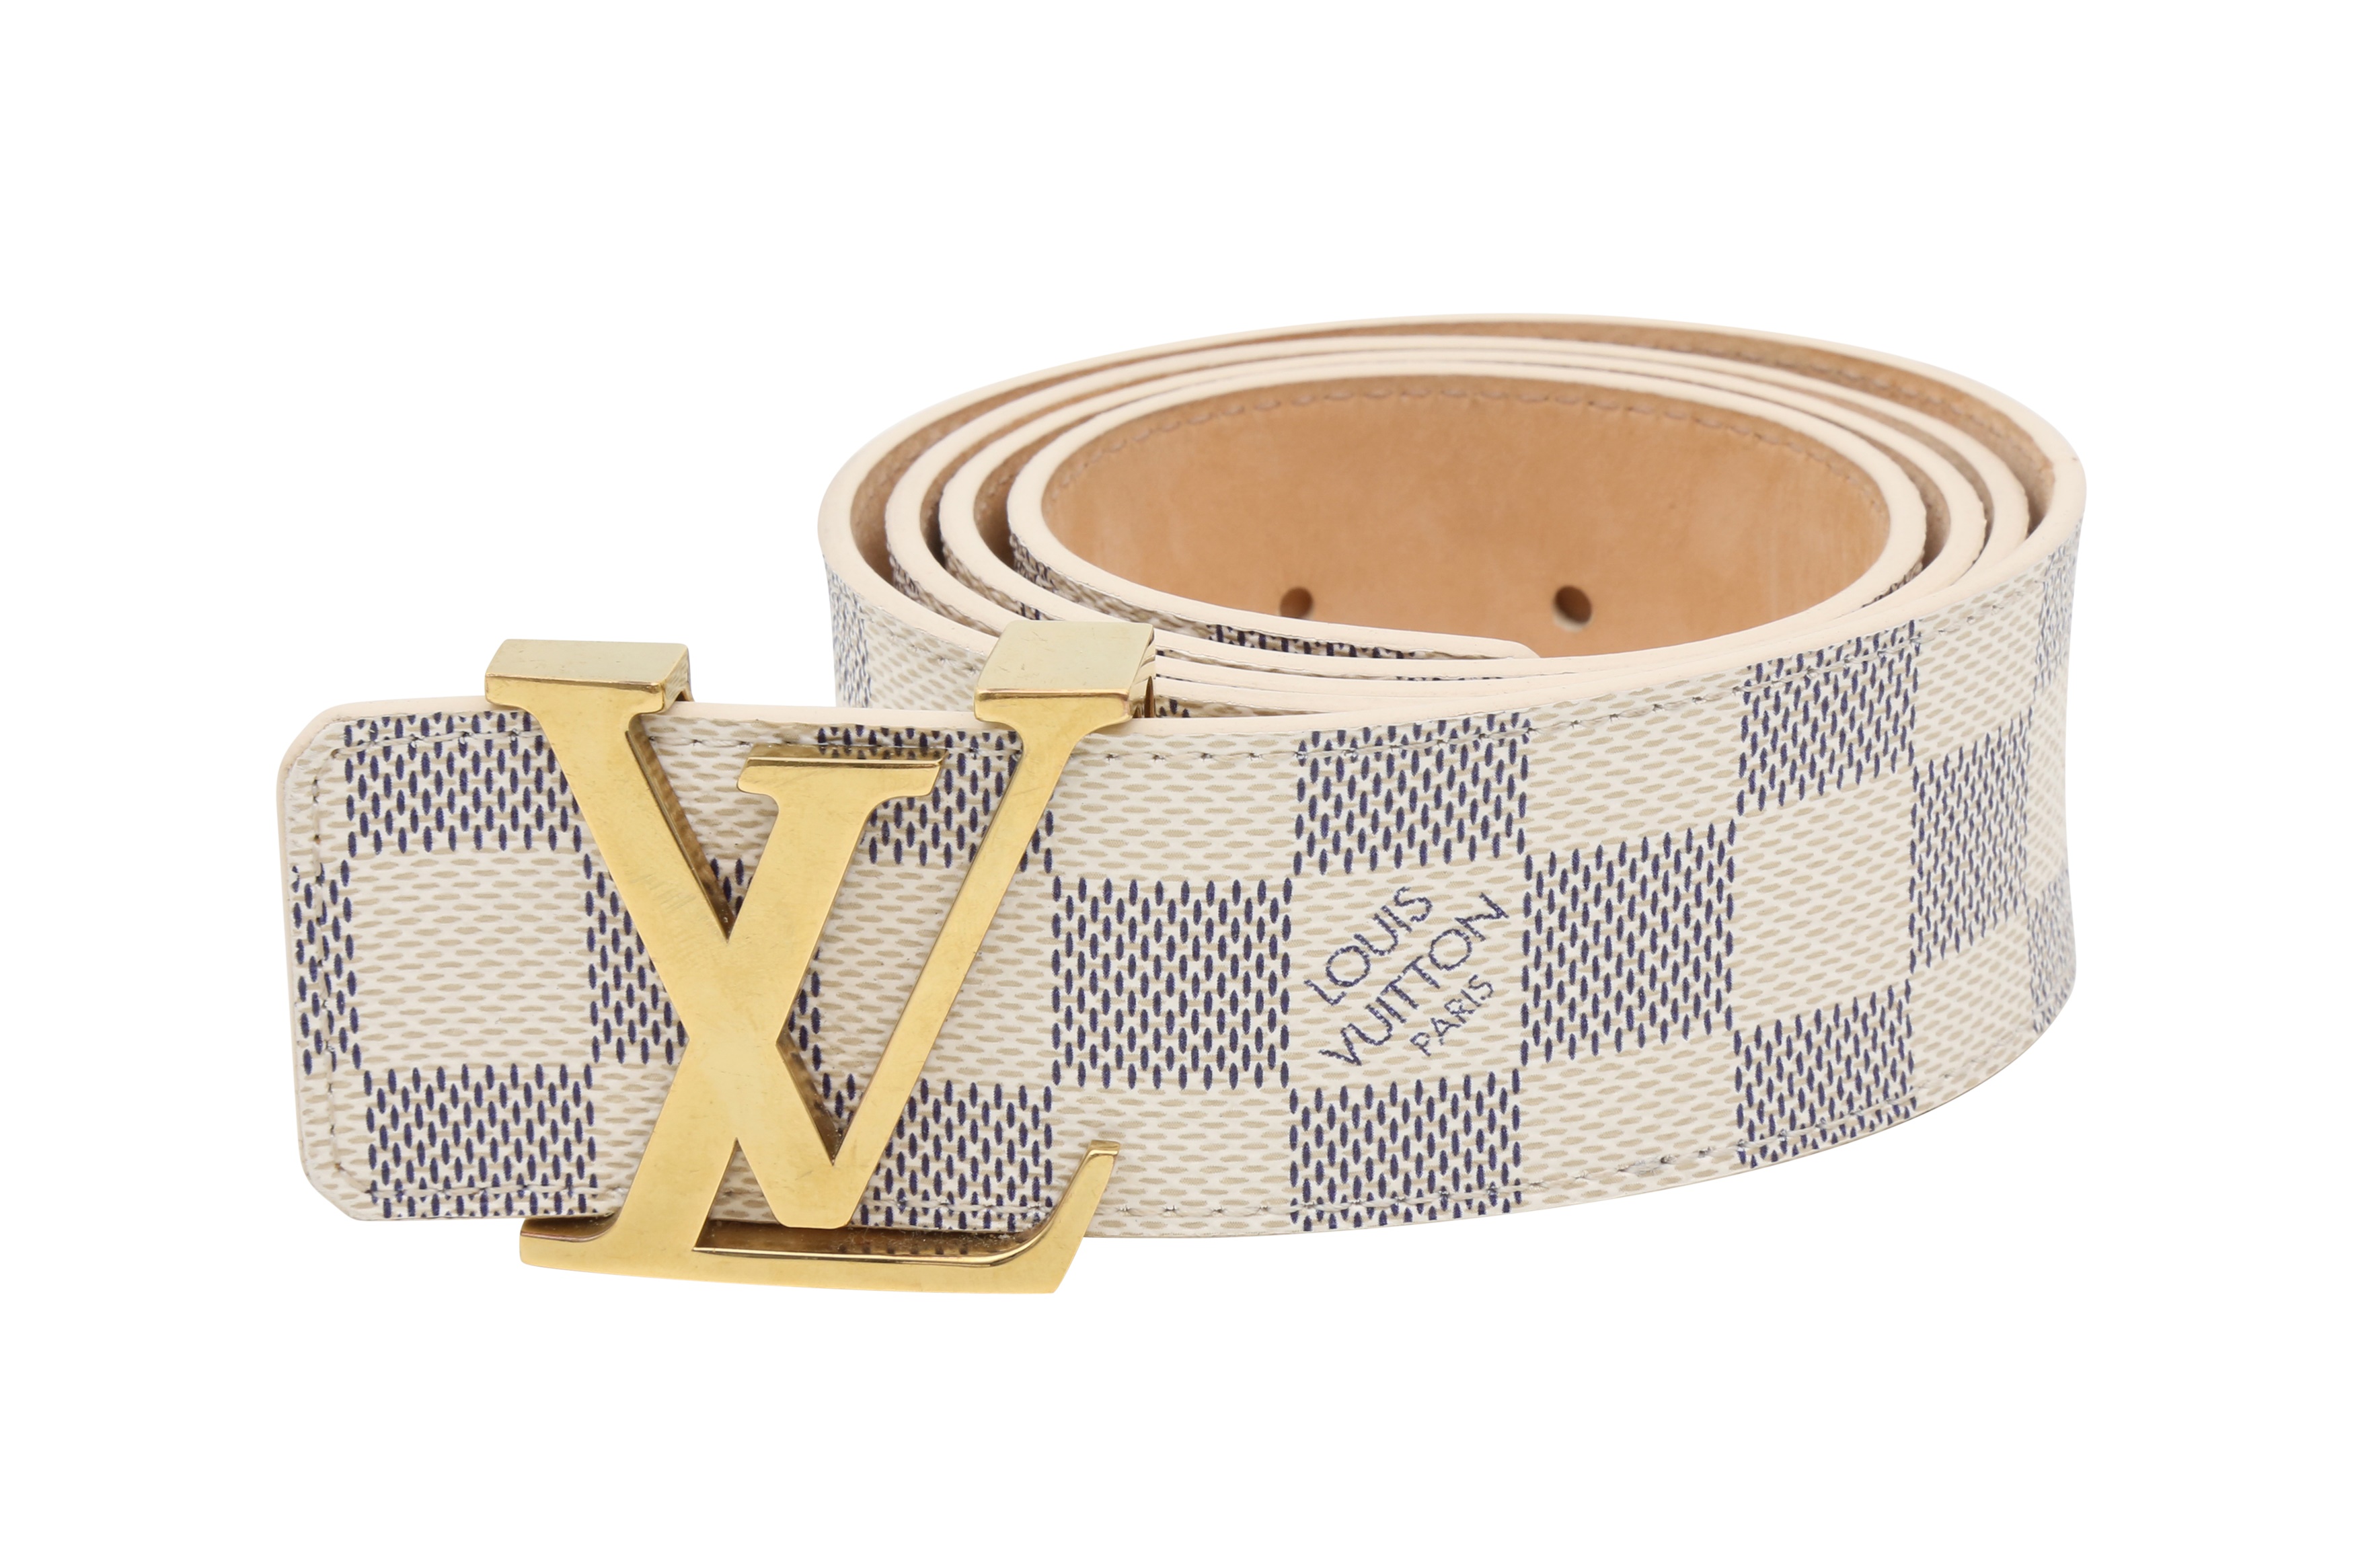 Louis Vuitton Damier Azur Belt with Gold-toned Buckle